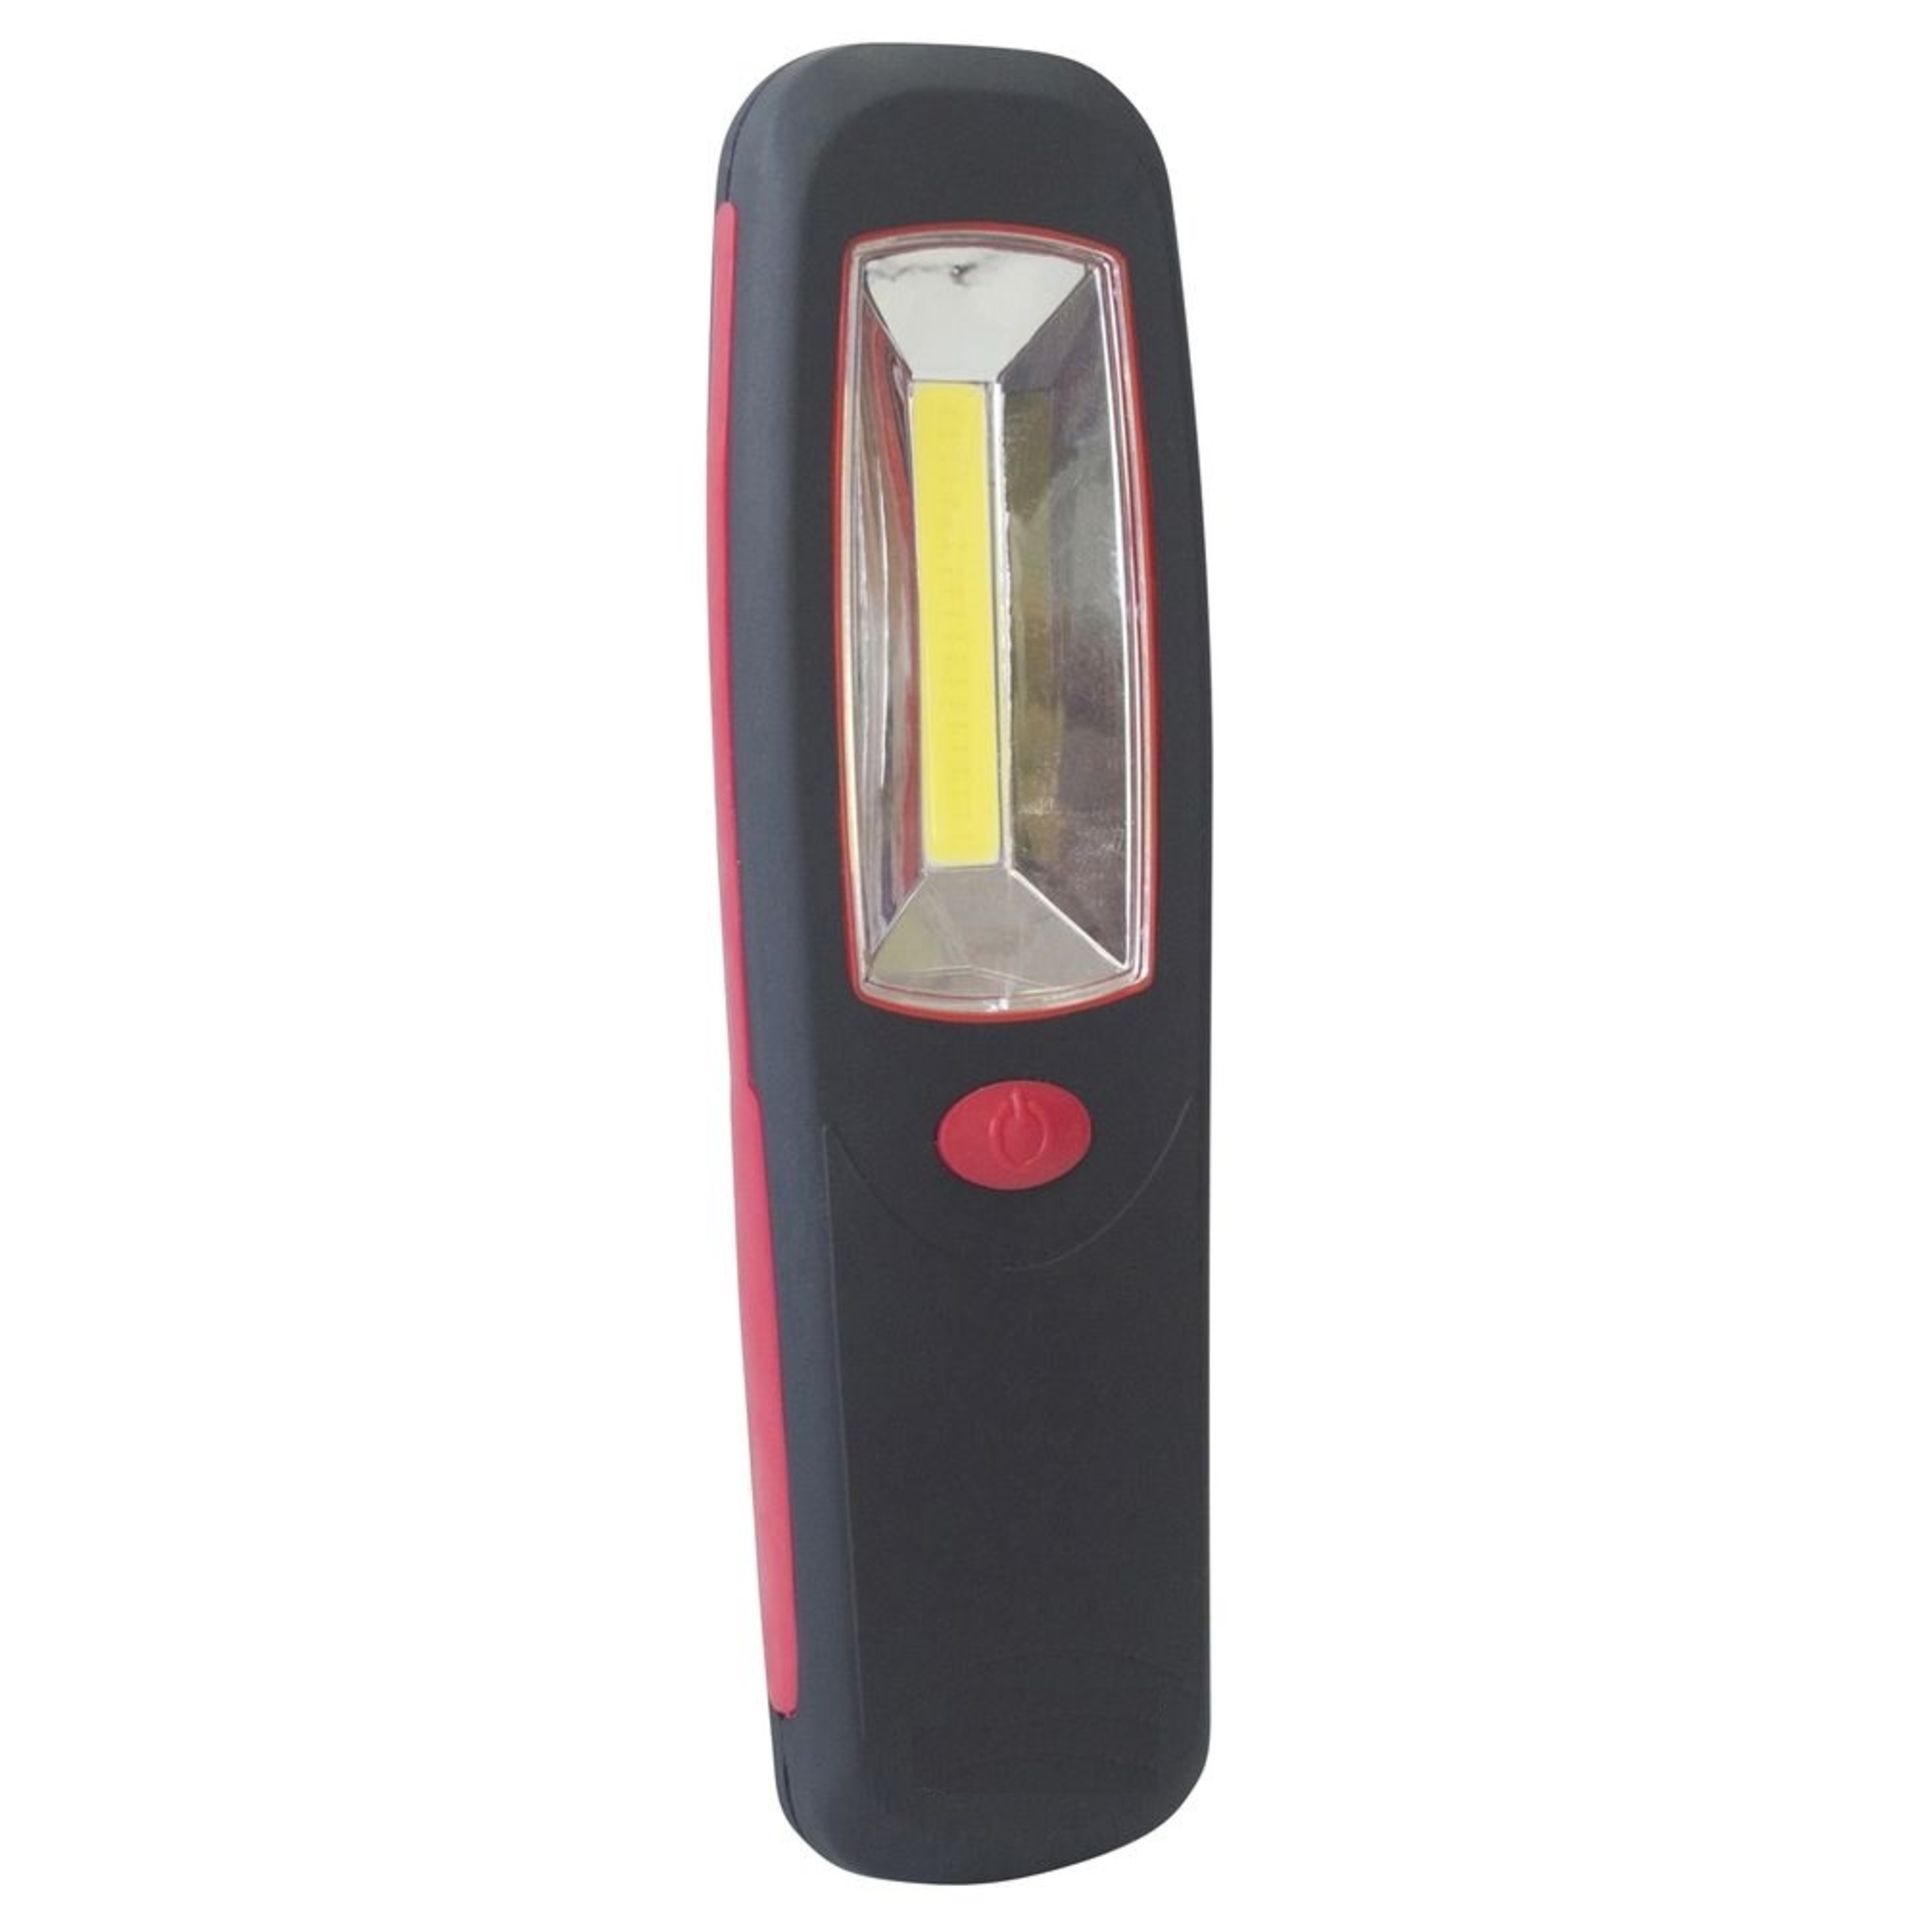 + VAT Brand New 5 Watt COB Worklight With Bright 250 Lumen Light - Hook & Magnet For Hands Free Use